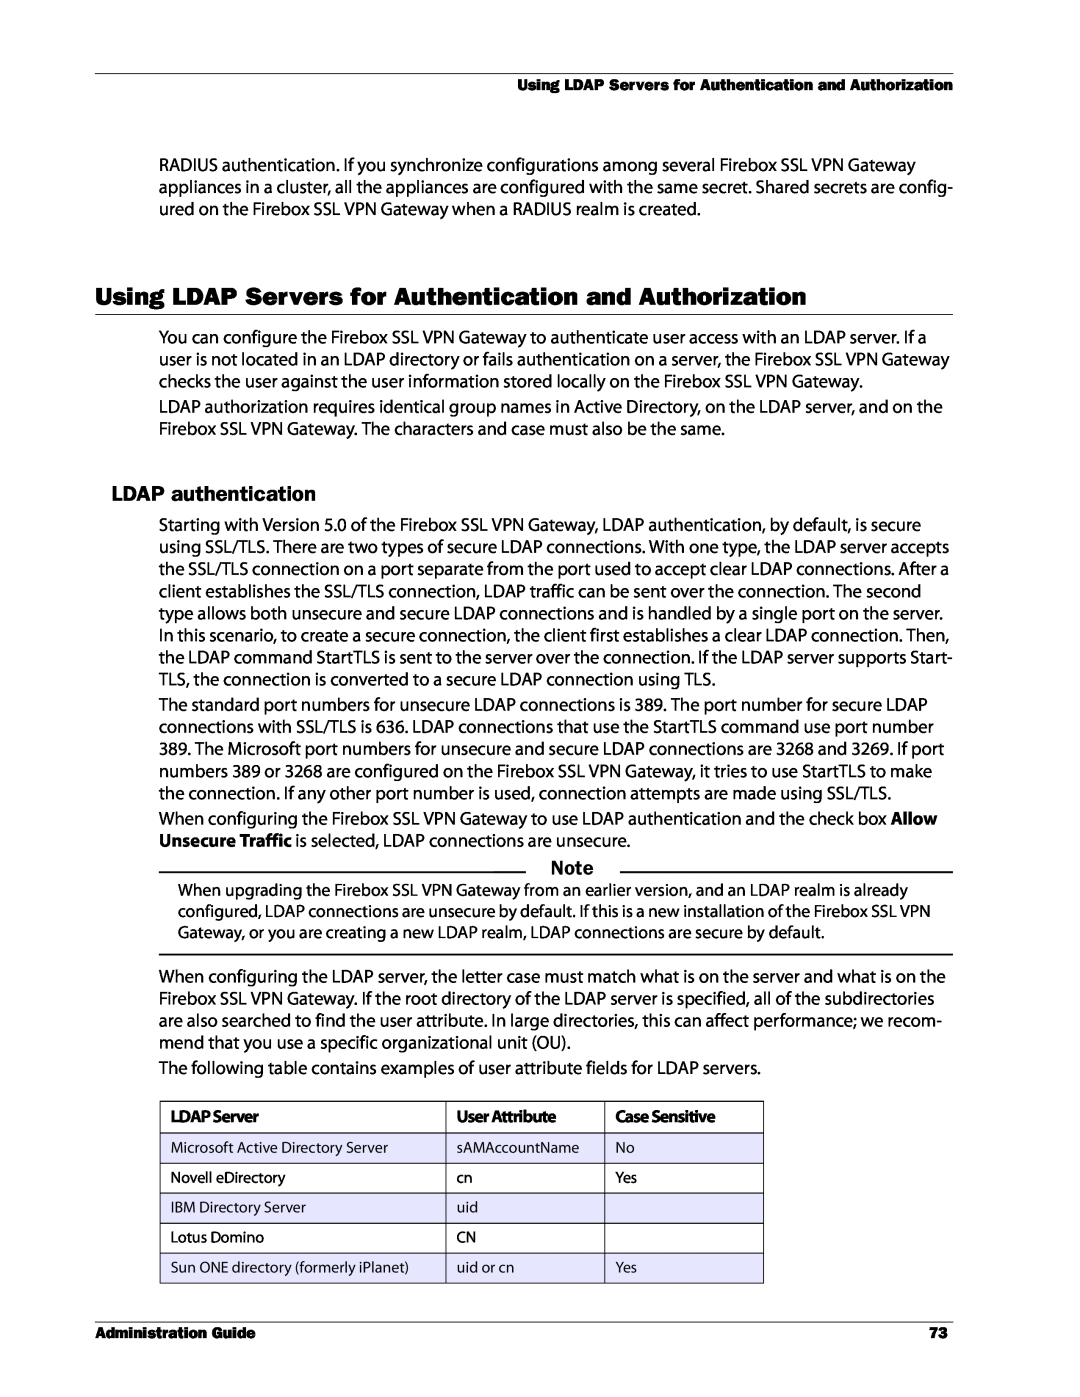 WatchGuard Technologies SSL VPN manual LDAP authentication, LDAP Server, User Attribute, Case Sensitive 